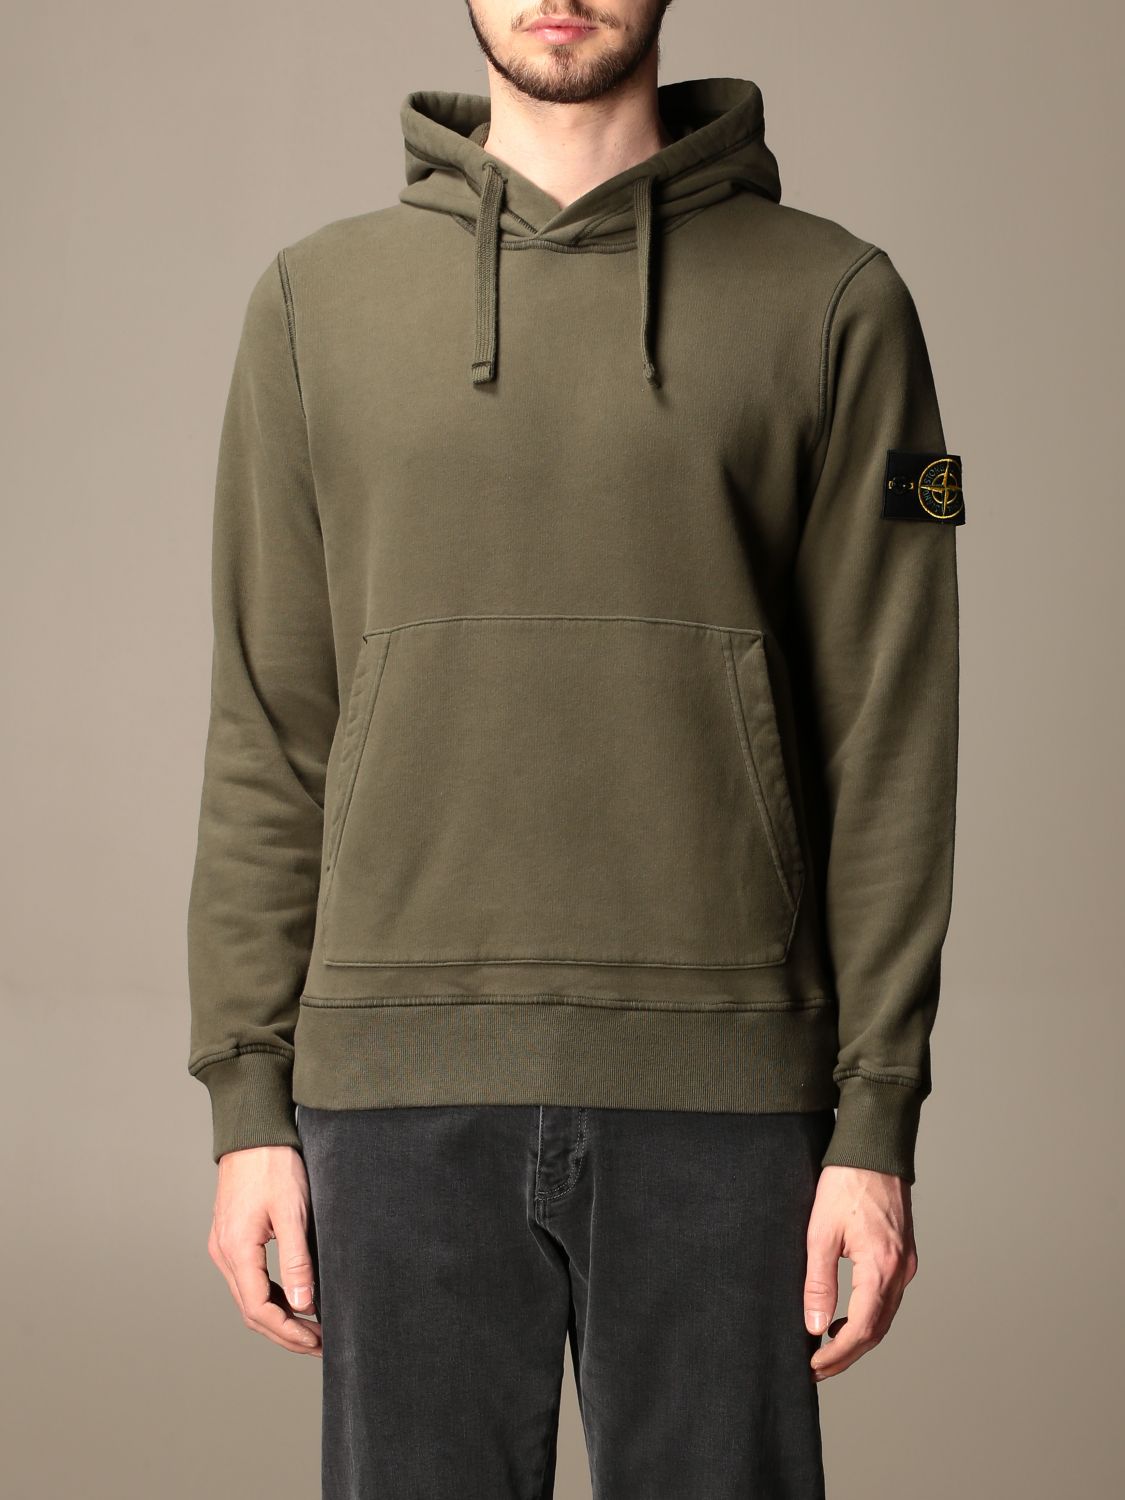 STONE ISLAND: hooded sweatshirt - Military | Stone Island sweatshirt ...